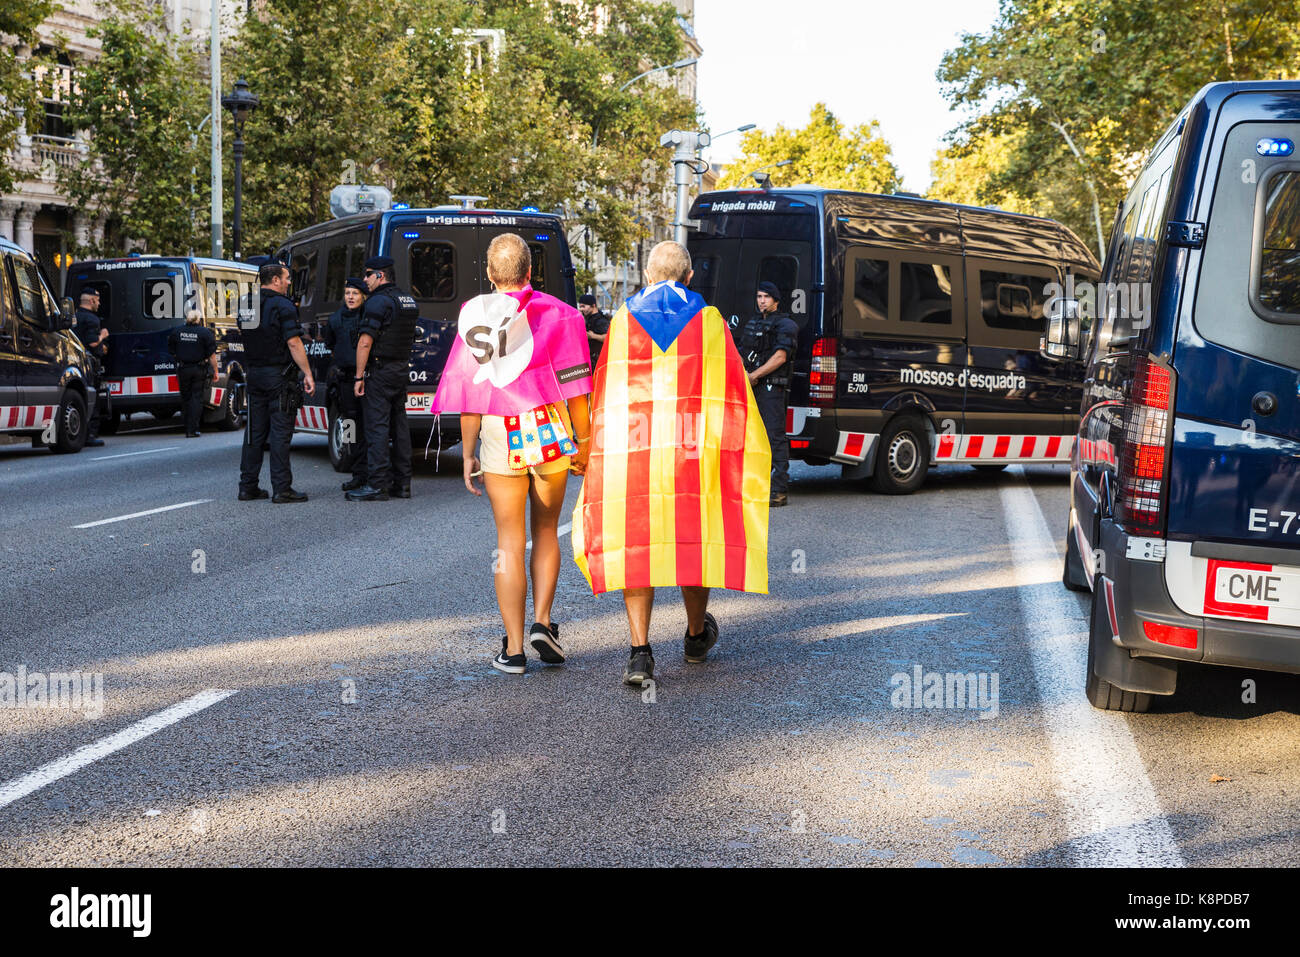 Barcelona, Spain - September 20, 2017: Couple walking between police cars towards demonstration for independence of Catalonia Credit: Jordi De Rueda Roigé/Alamy Live News Stock Photo